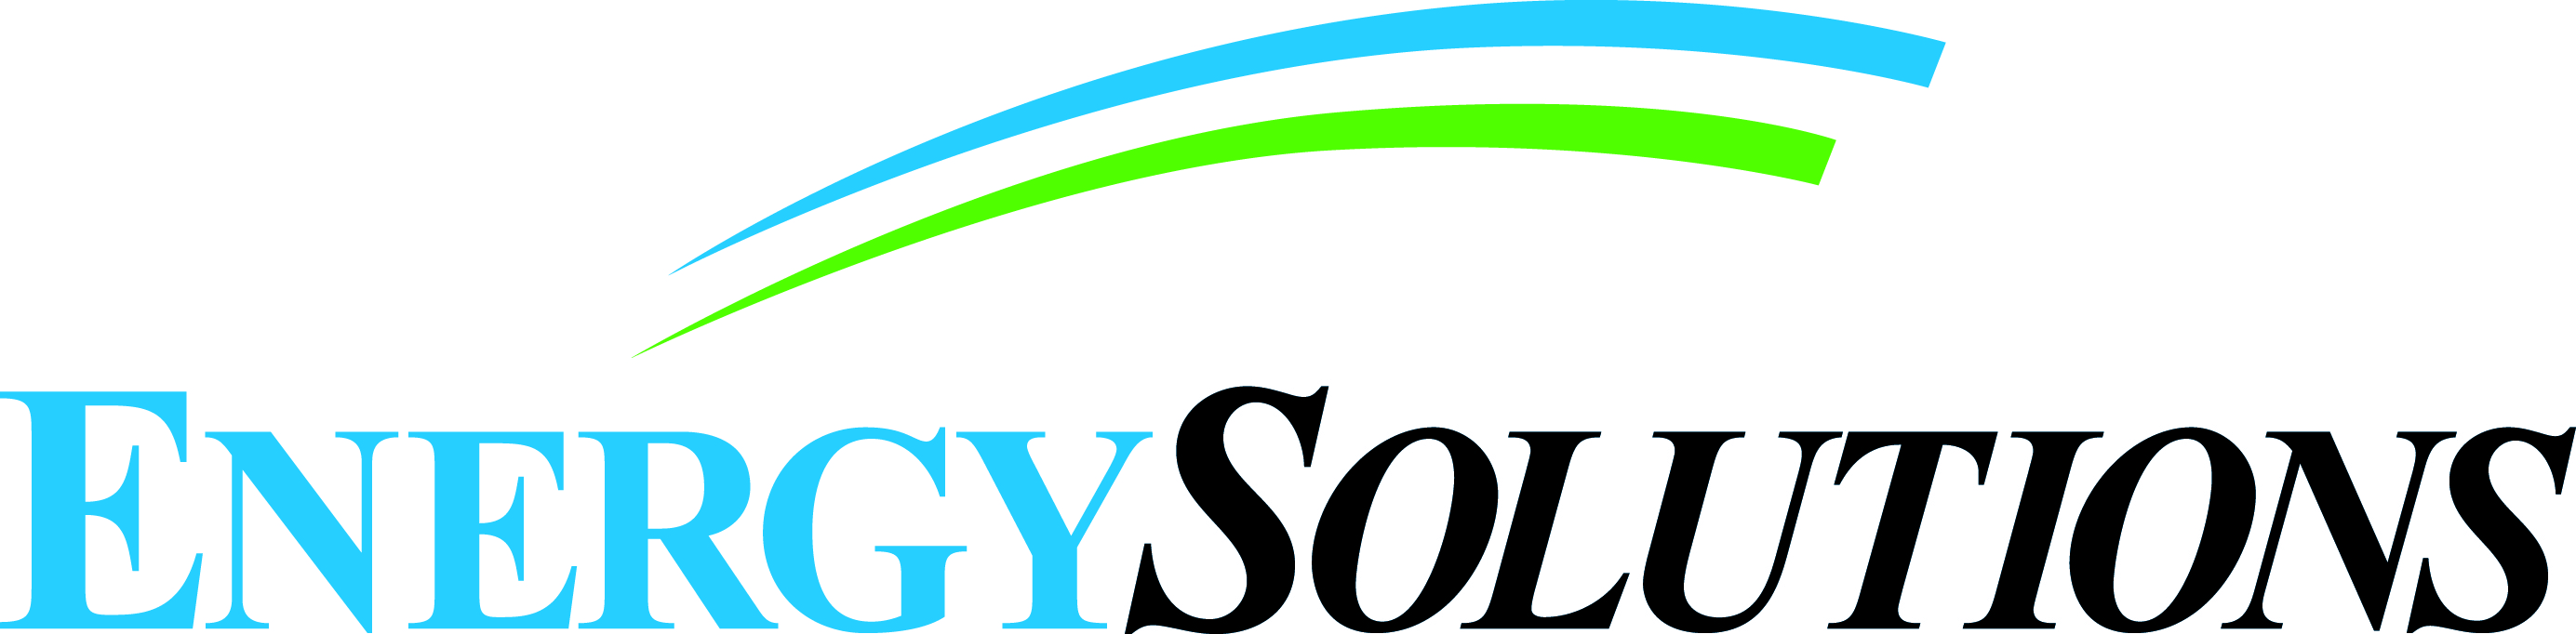 energysolutions-logo-CMYK.jpg